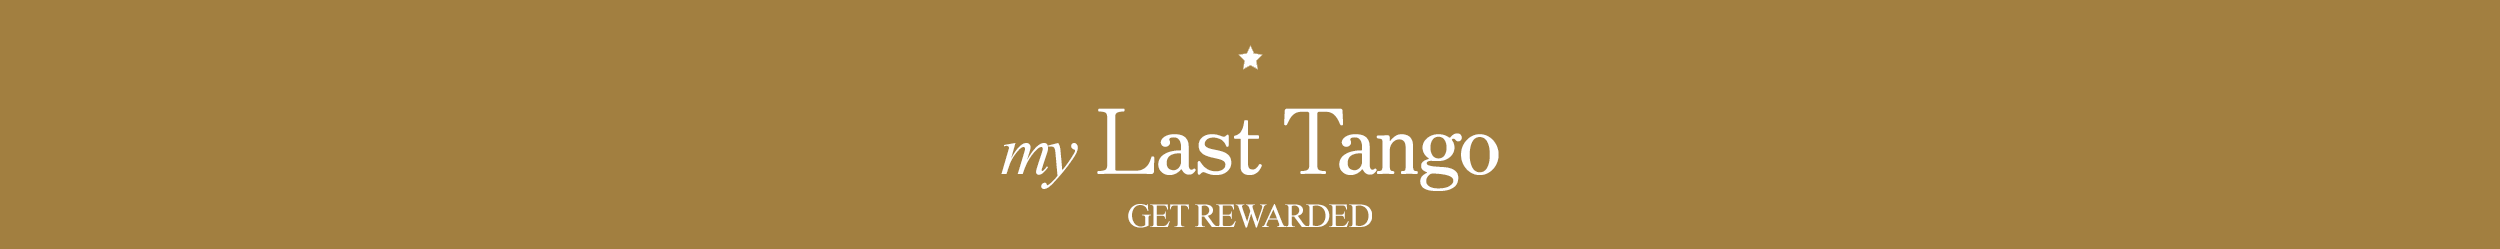 Last Tango reward Program-MYLASTTANGO